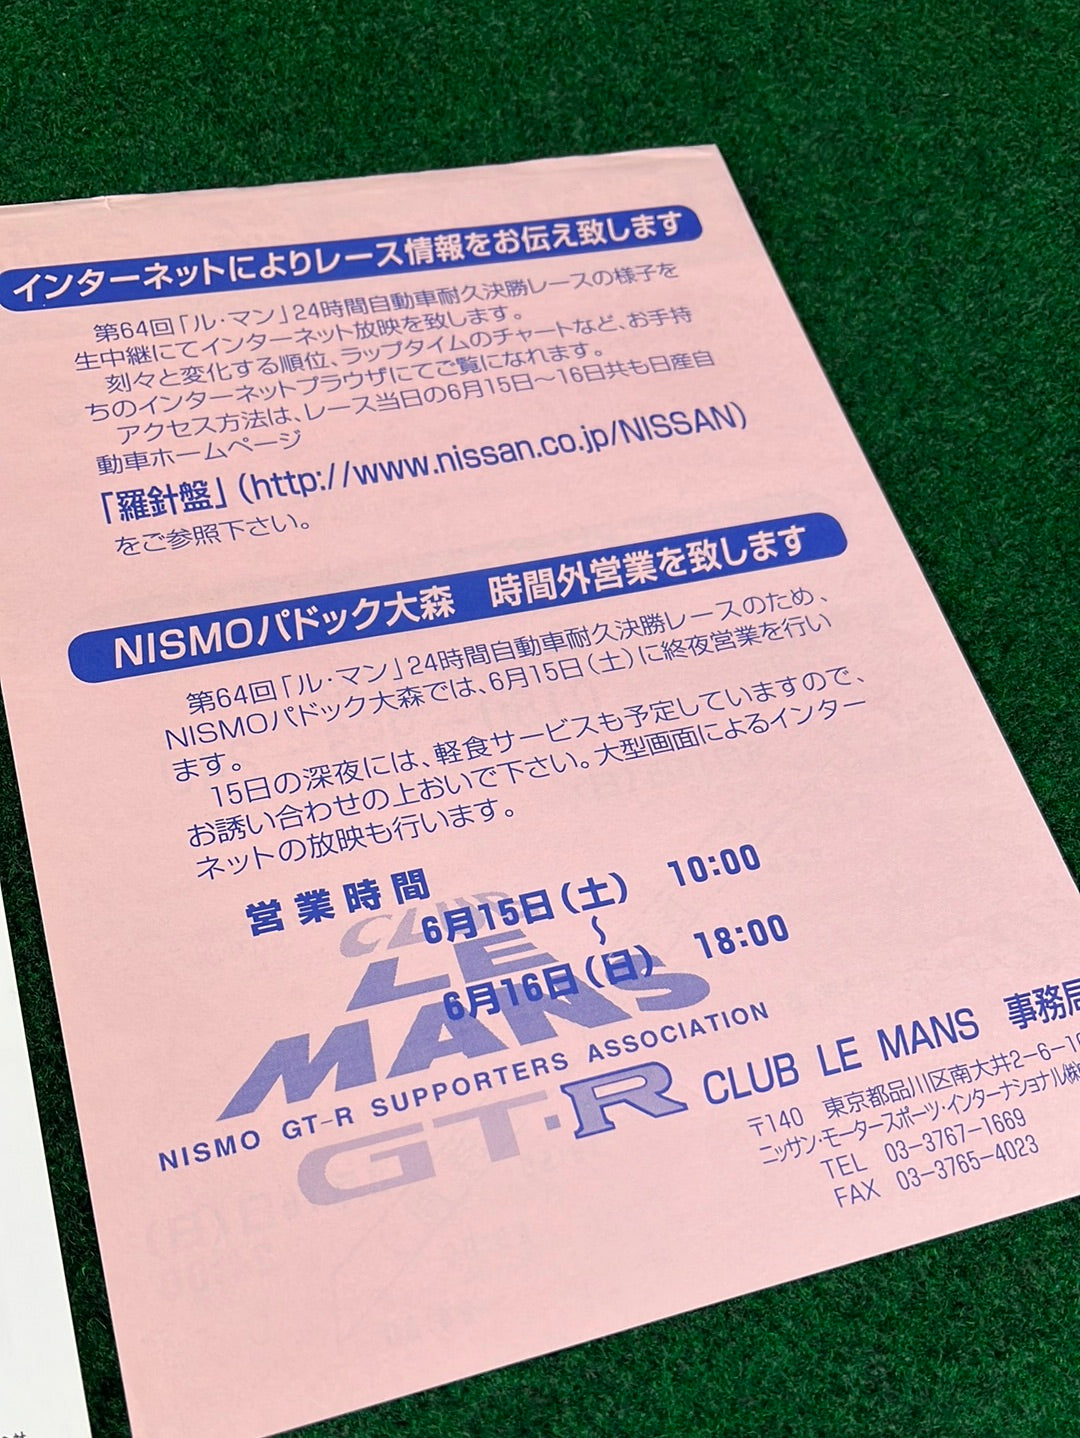 NISMO - Navi In Multimeter Flyer & Club Le Mans Club Event Flyer